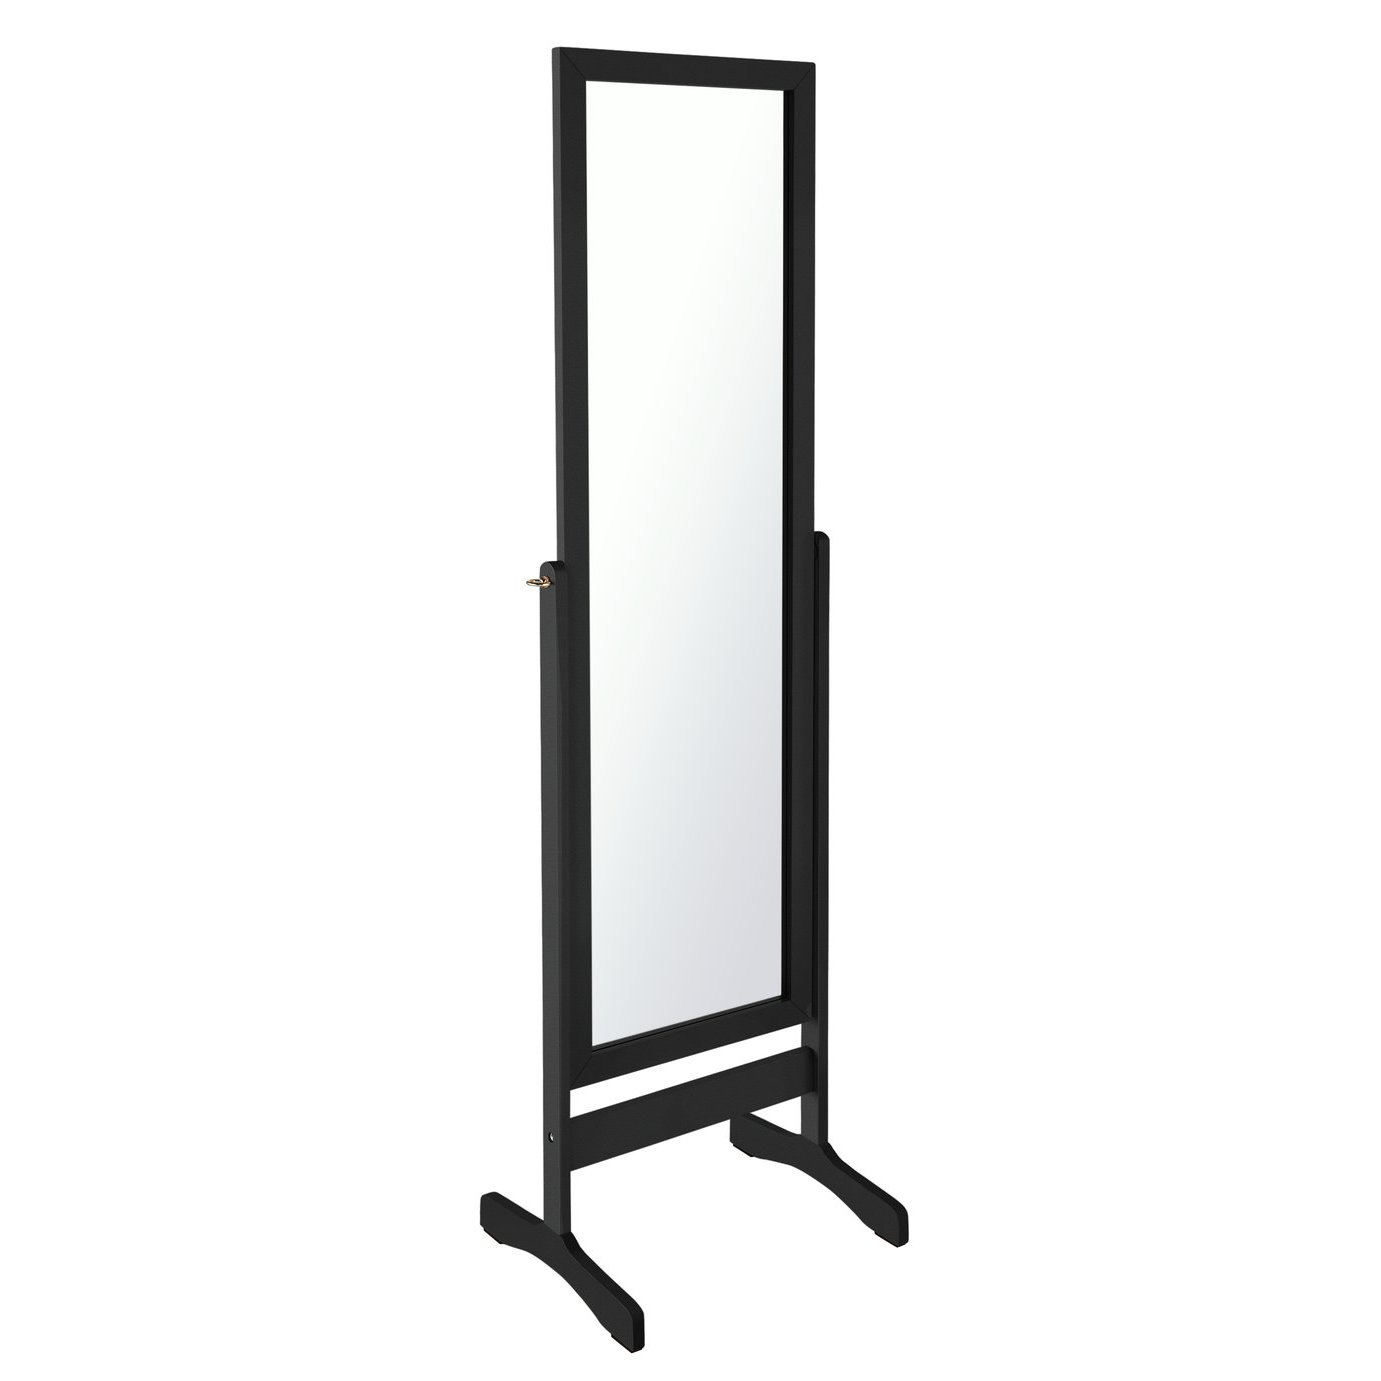 Argos Home Free Standing Mirror - Black - 41x145cm